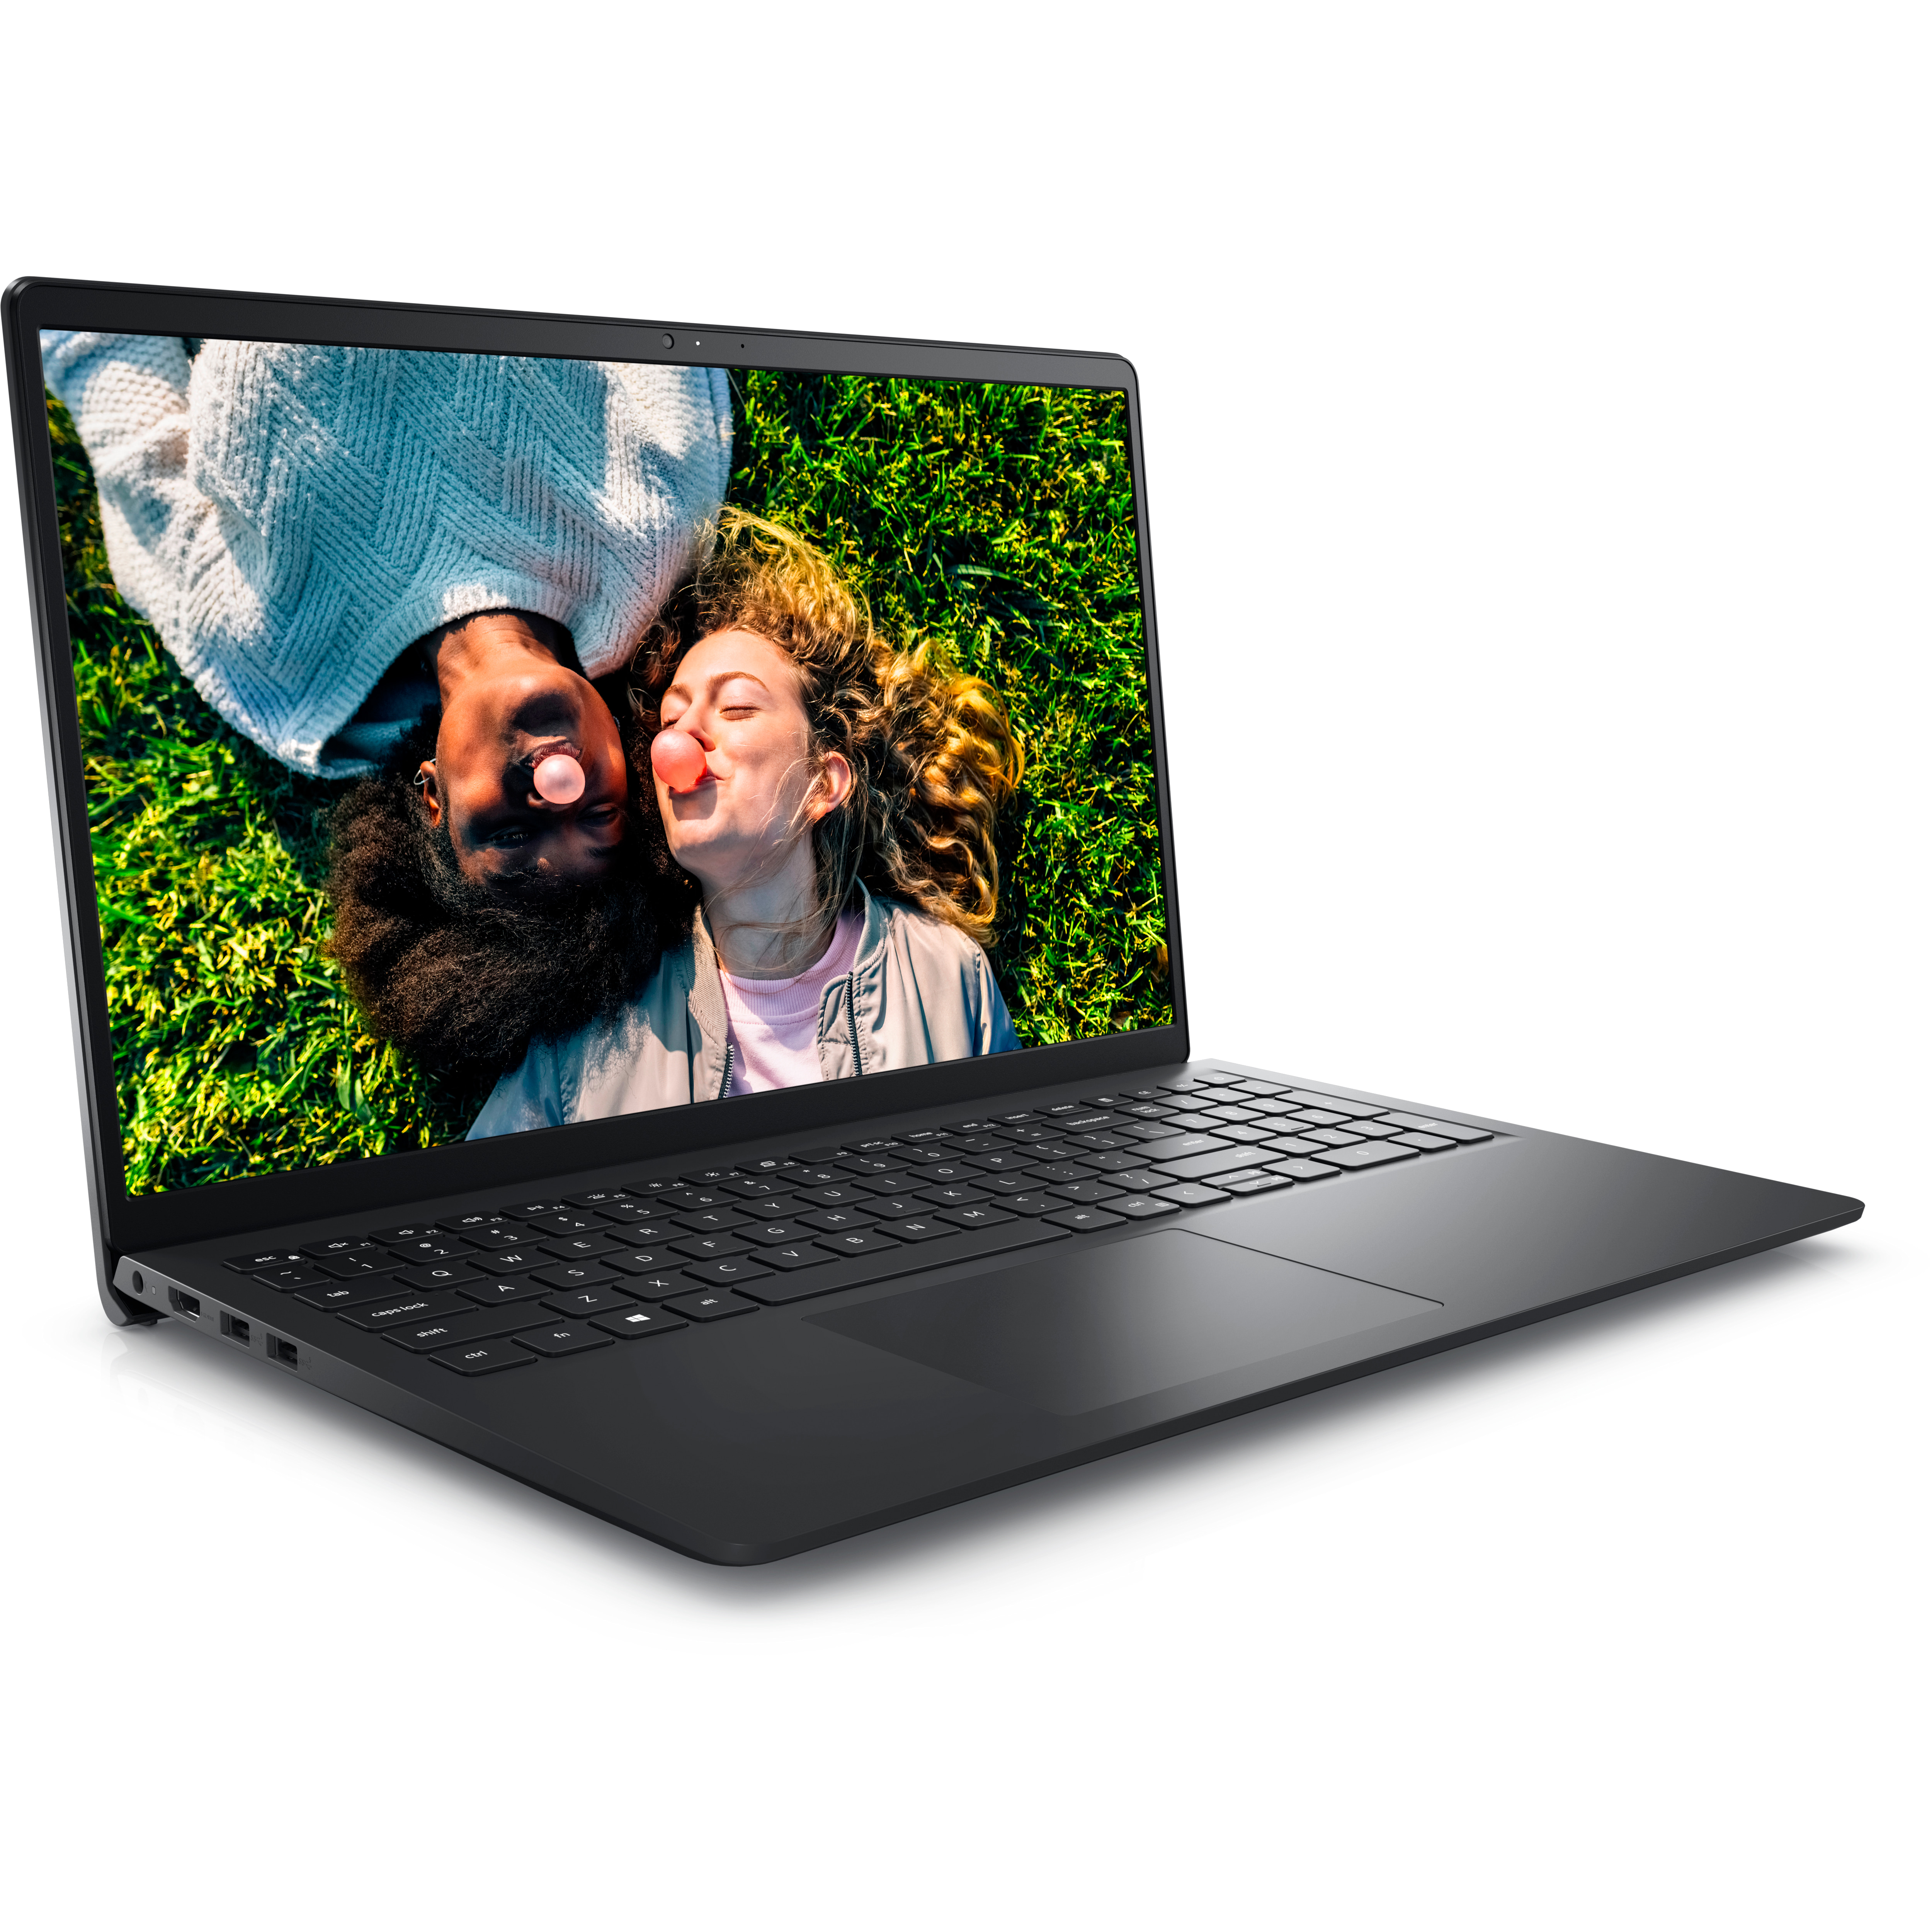 Dell Inspiron 15 3000 Laptop | Dell USA